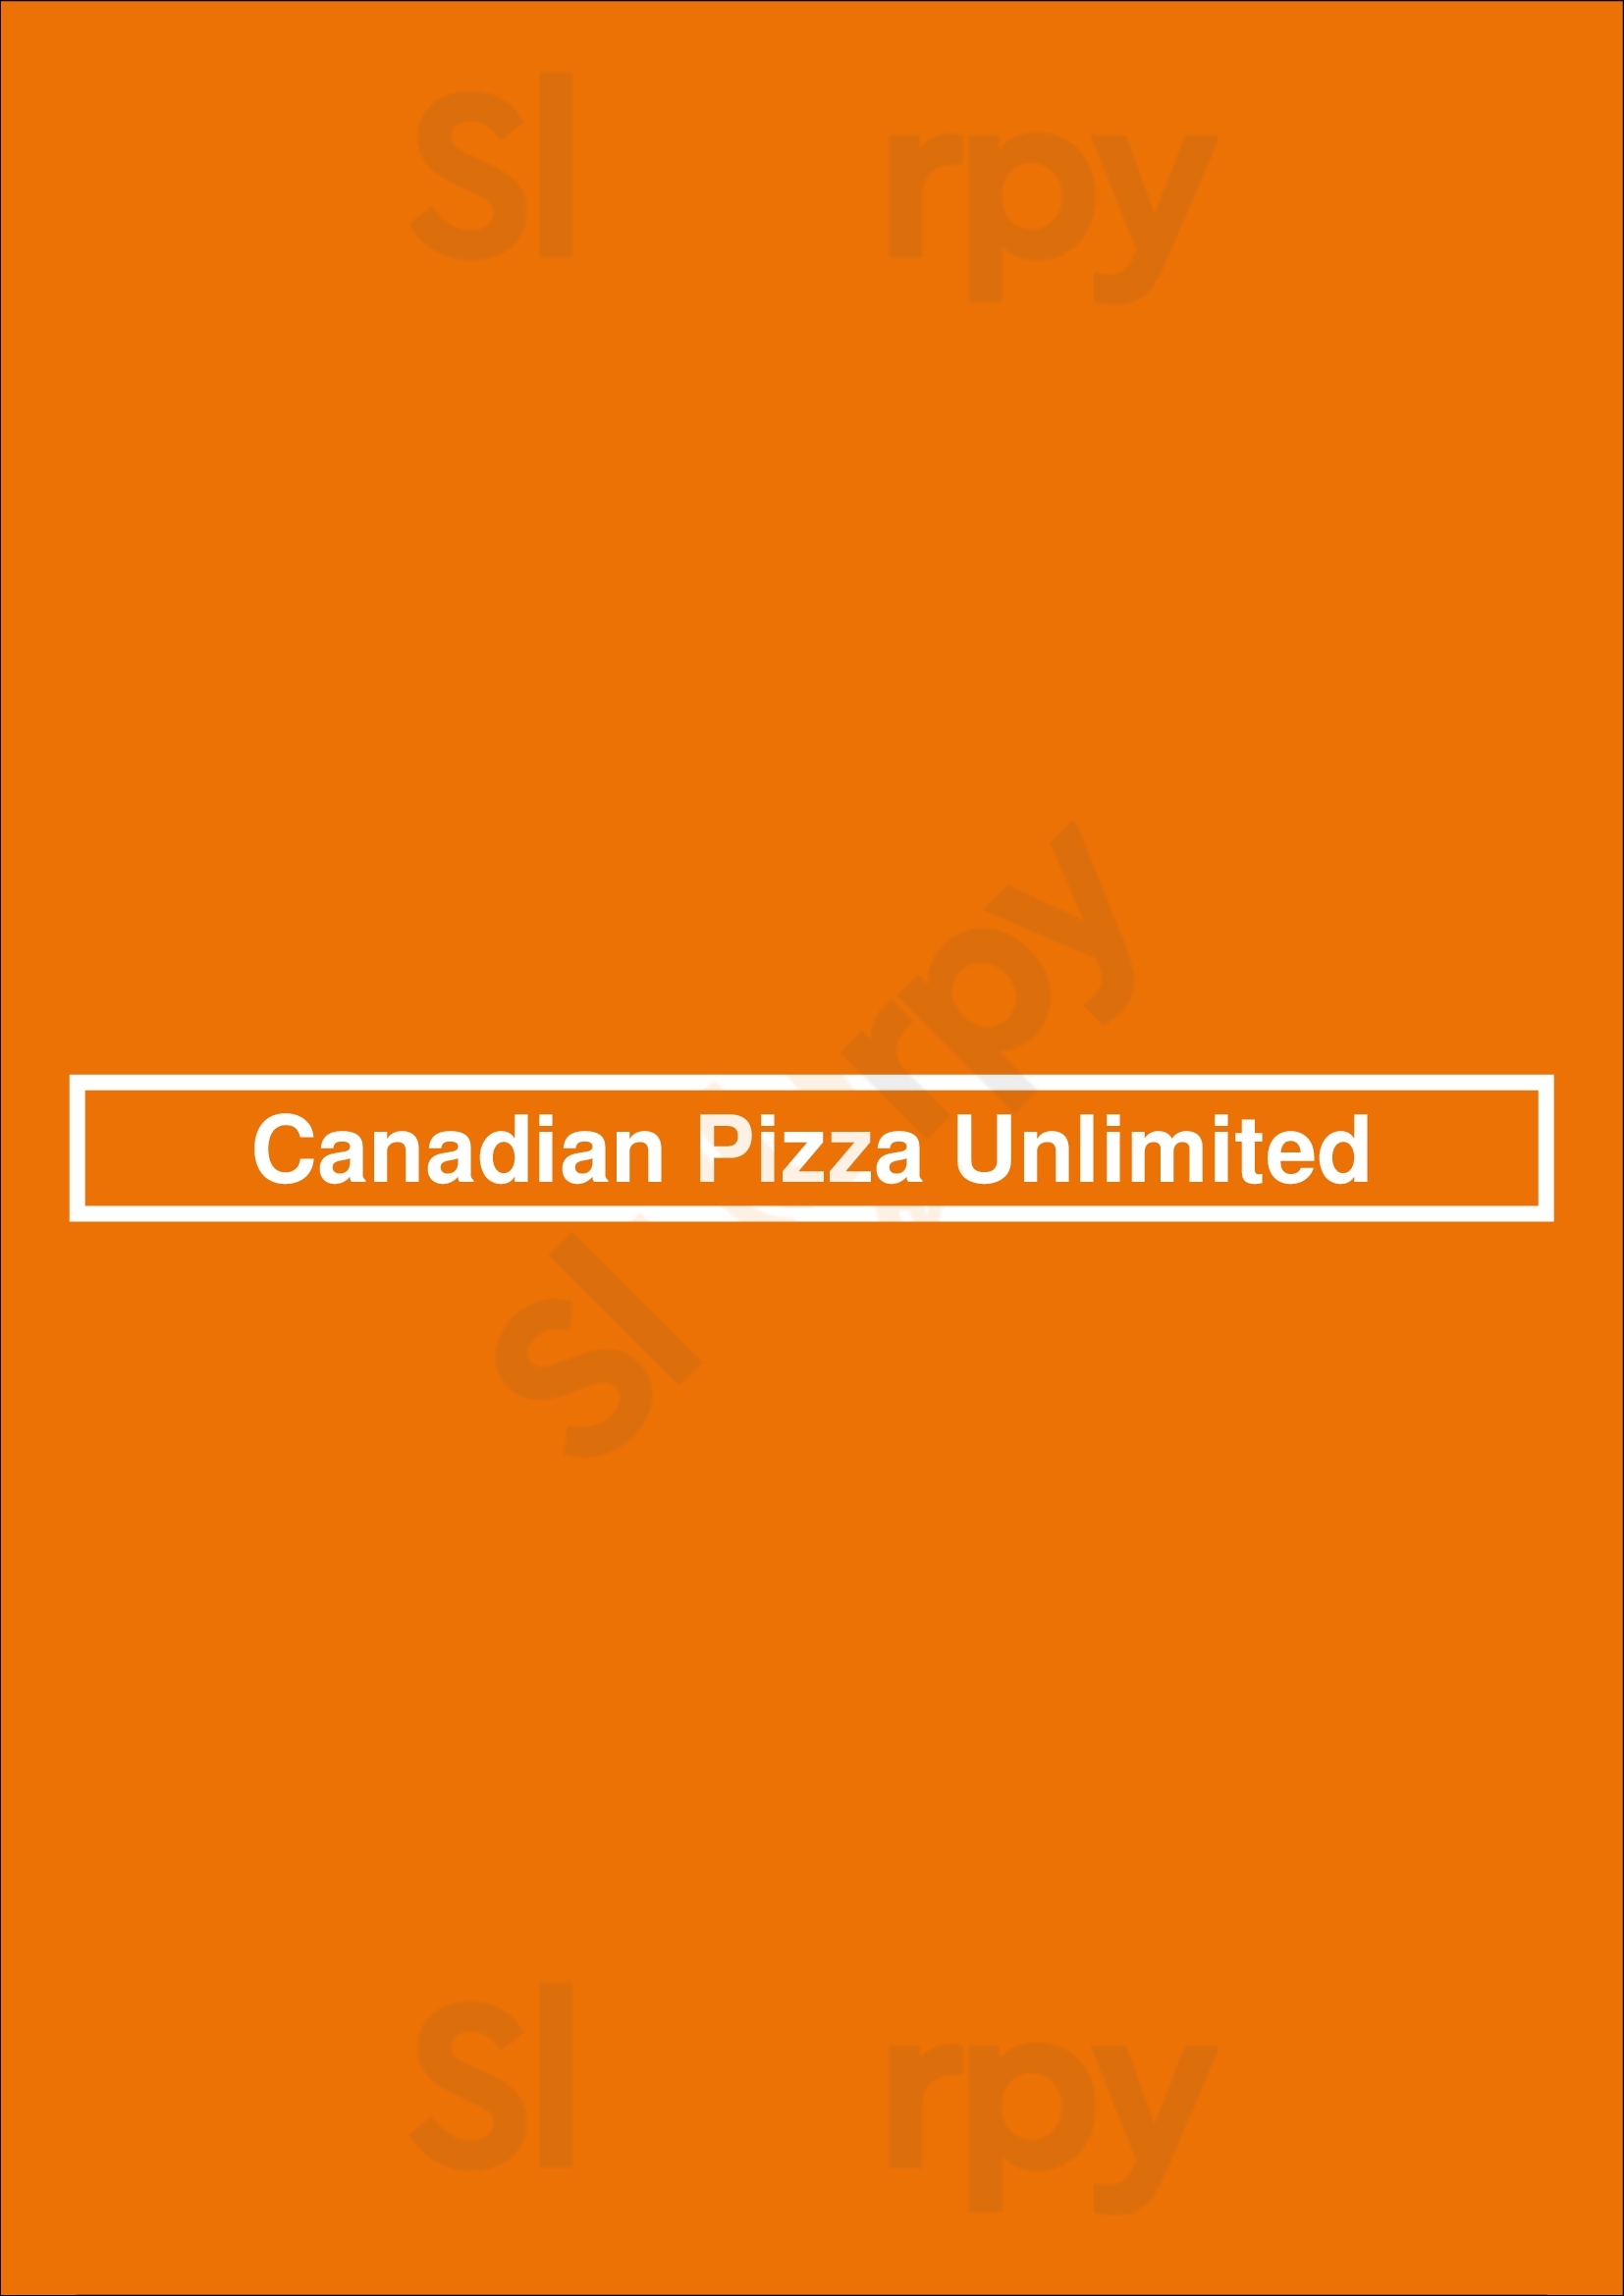 Canadian Pizza Unlimited Calgary Menu - 1